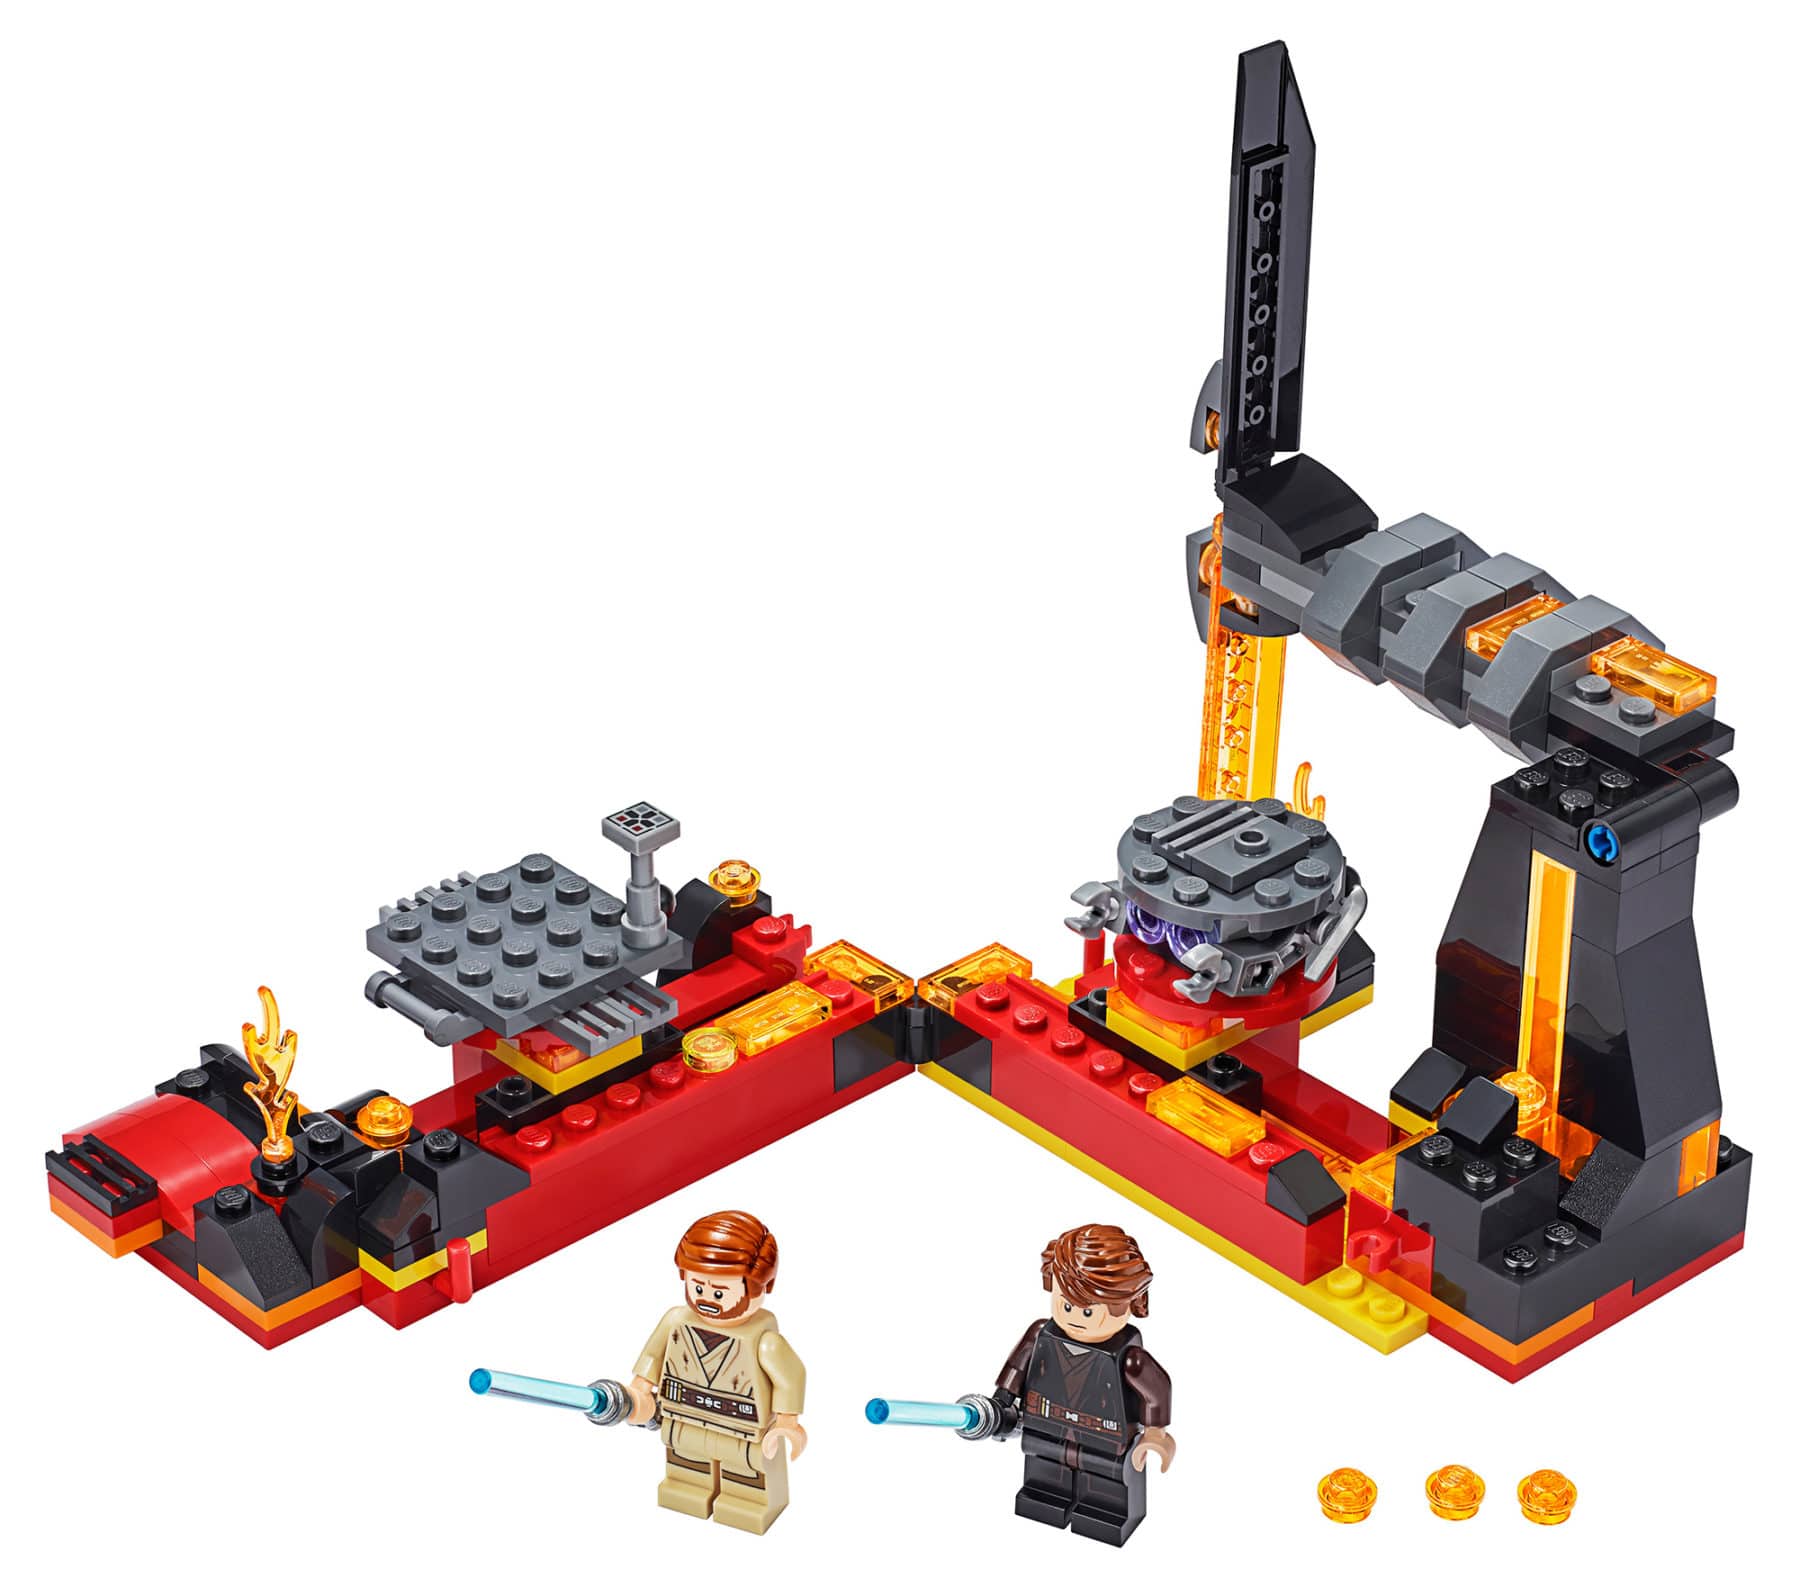 LEGO 75269 Star Wars Duel on Mustafar